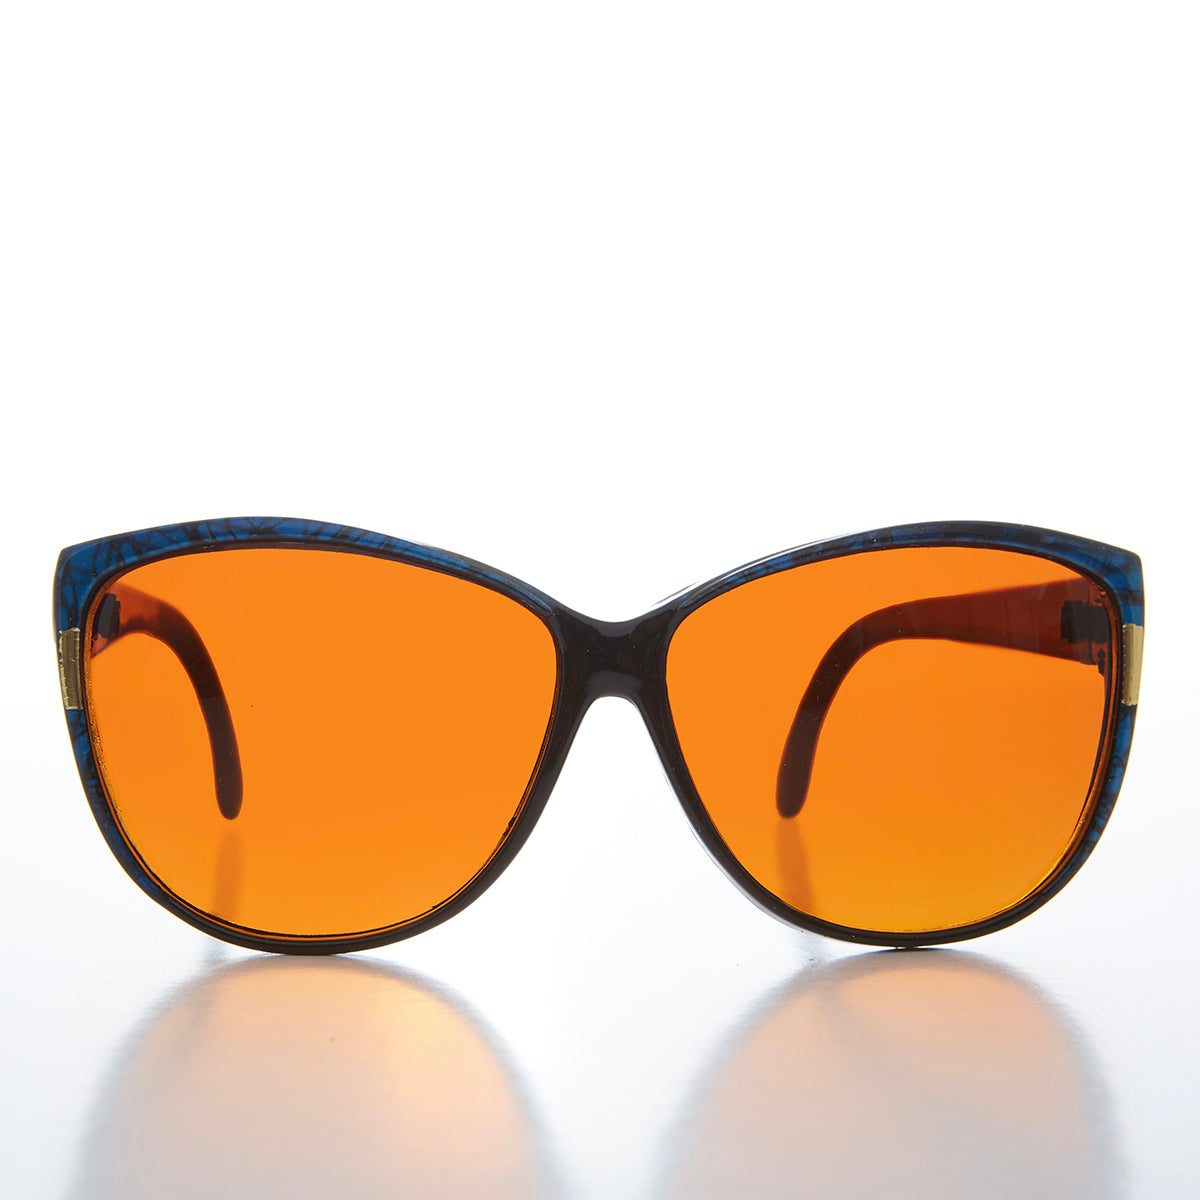 Women's Large Orange Lens Sunglasses